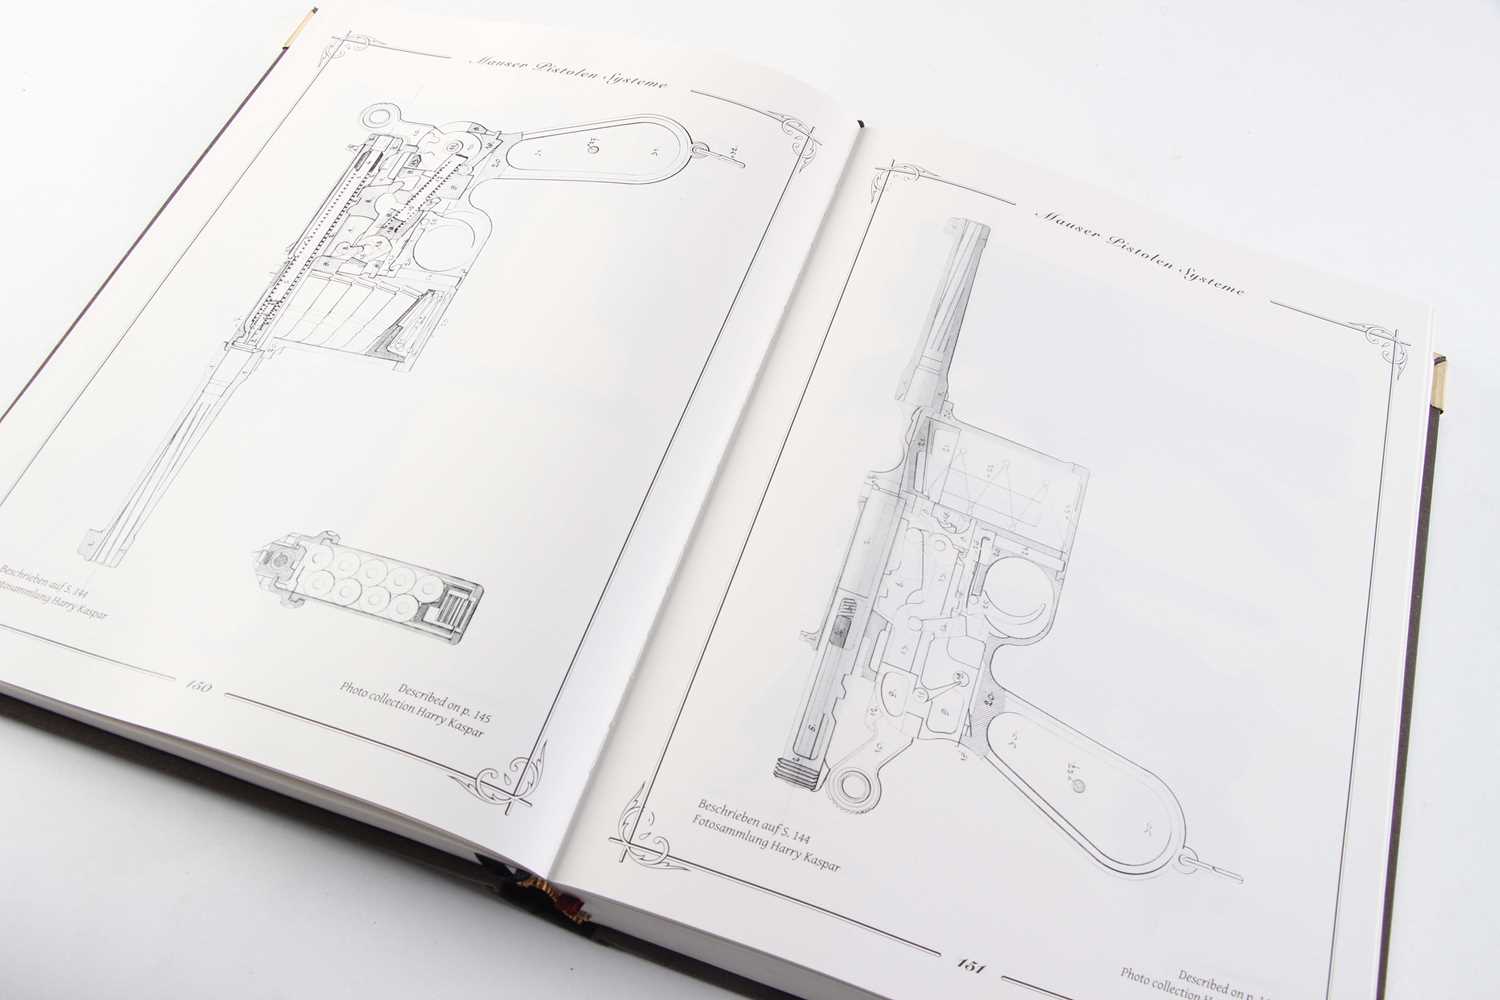 Vol: Mauser Pistolen Systeme by Harry Kaspar - Image 2 of 5